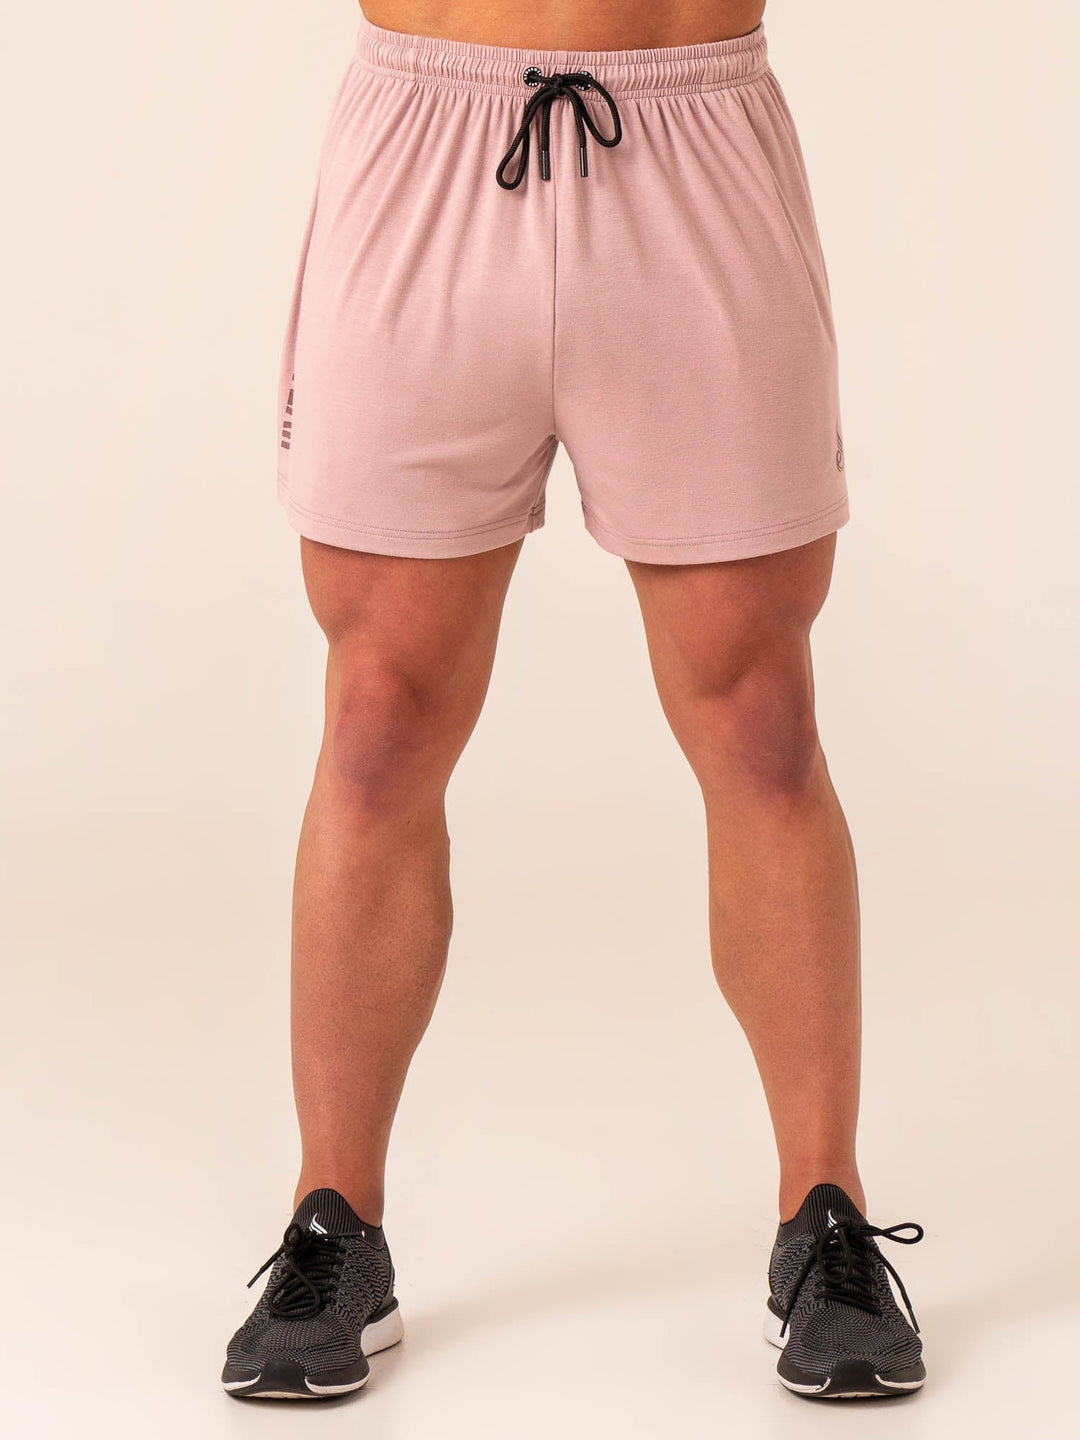 Arnie Shorts - Cinder Clothing Ryderwear 